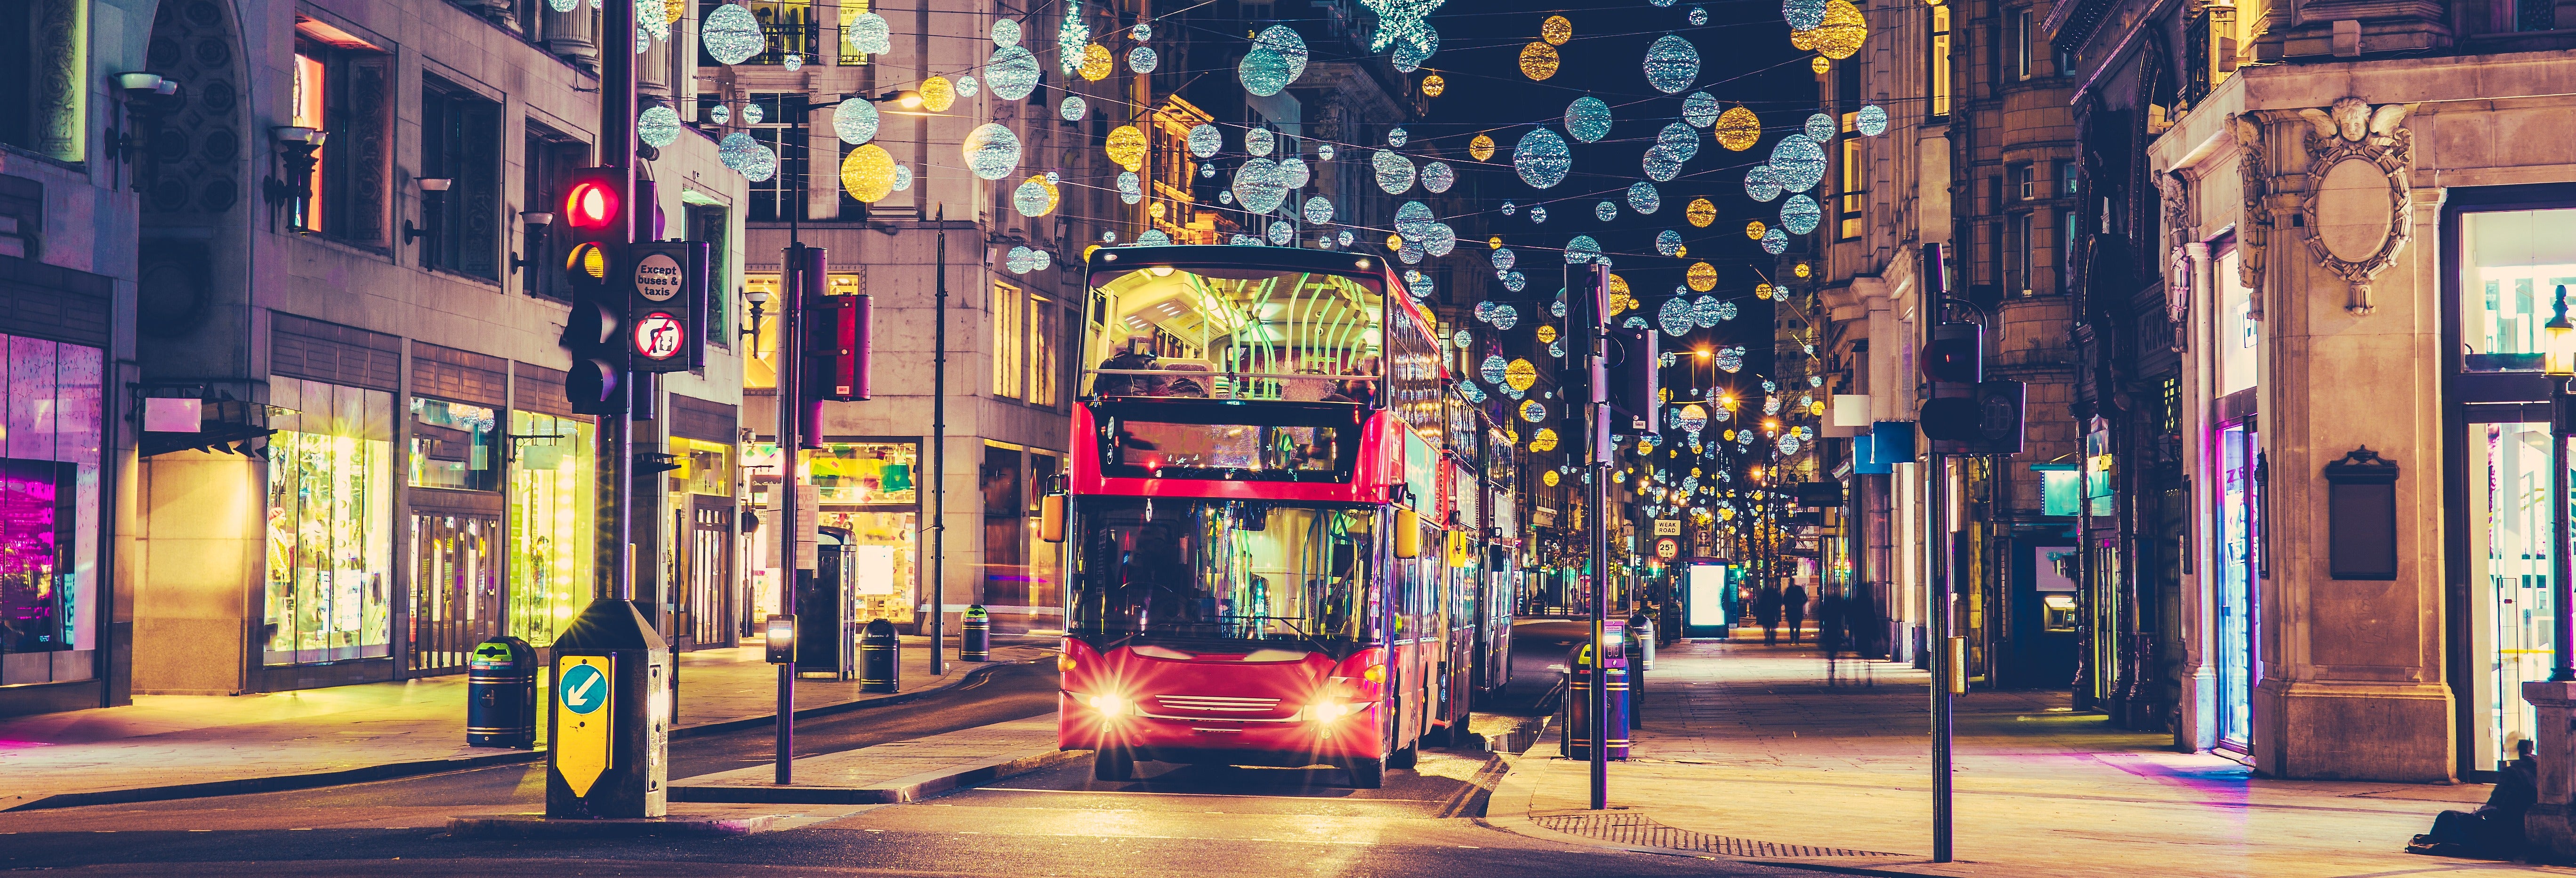 Ônibus natalino de Londres